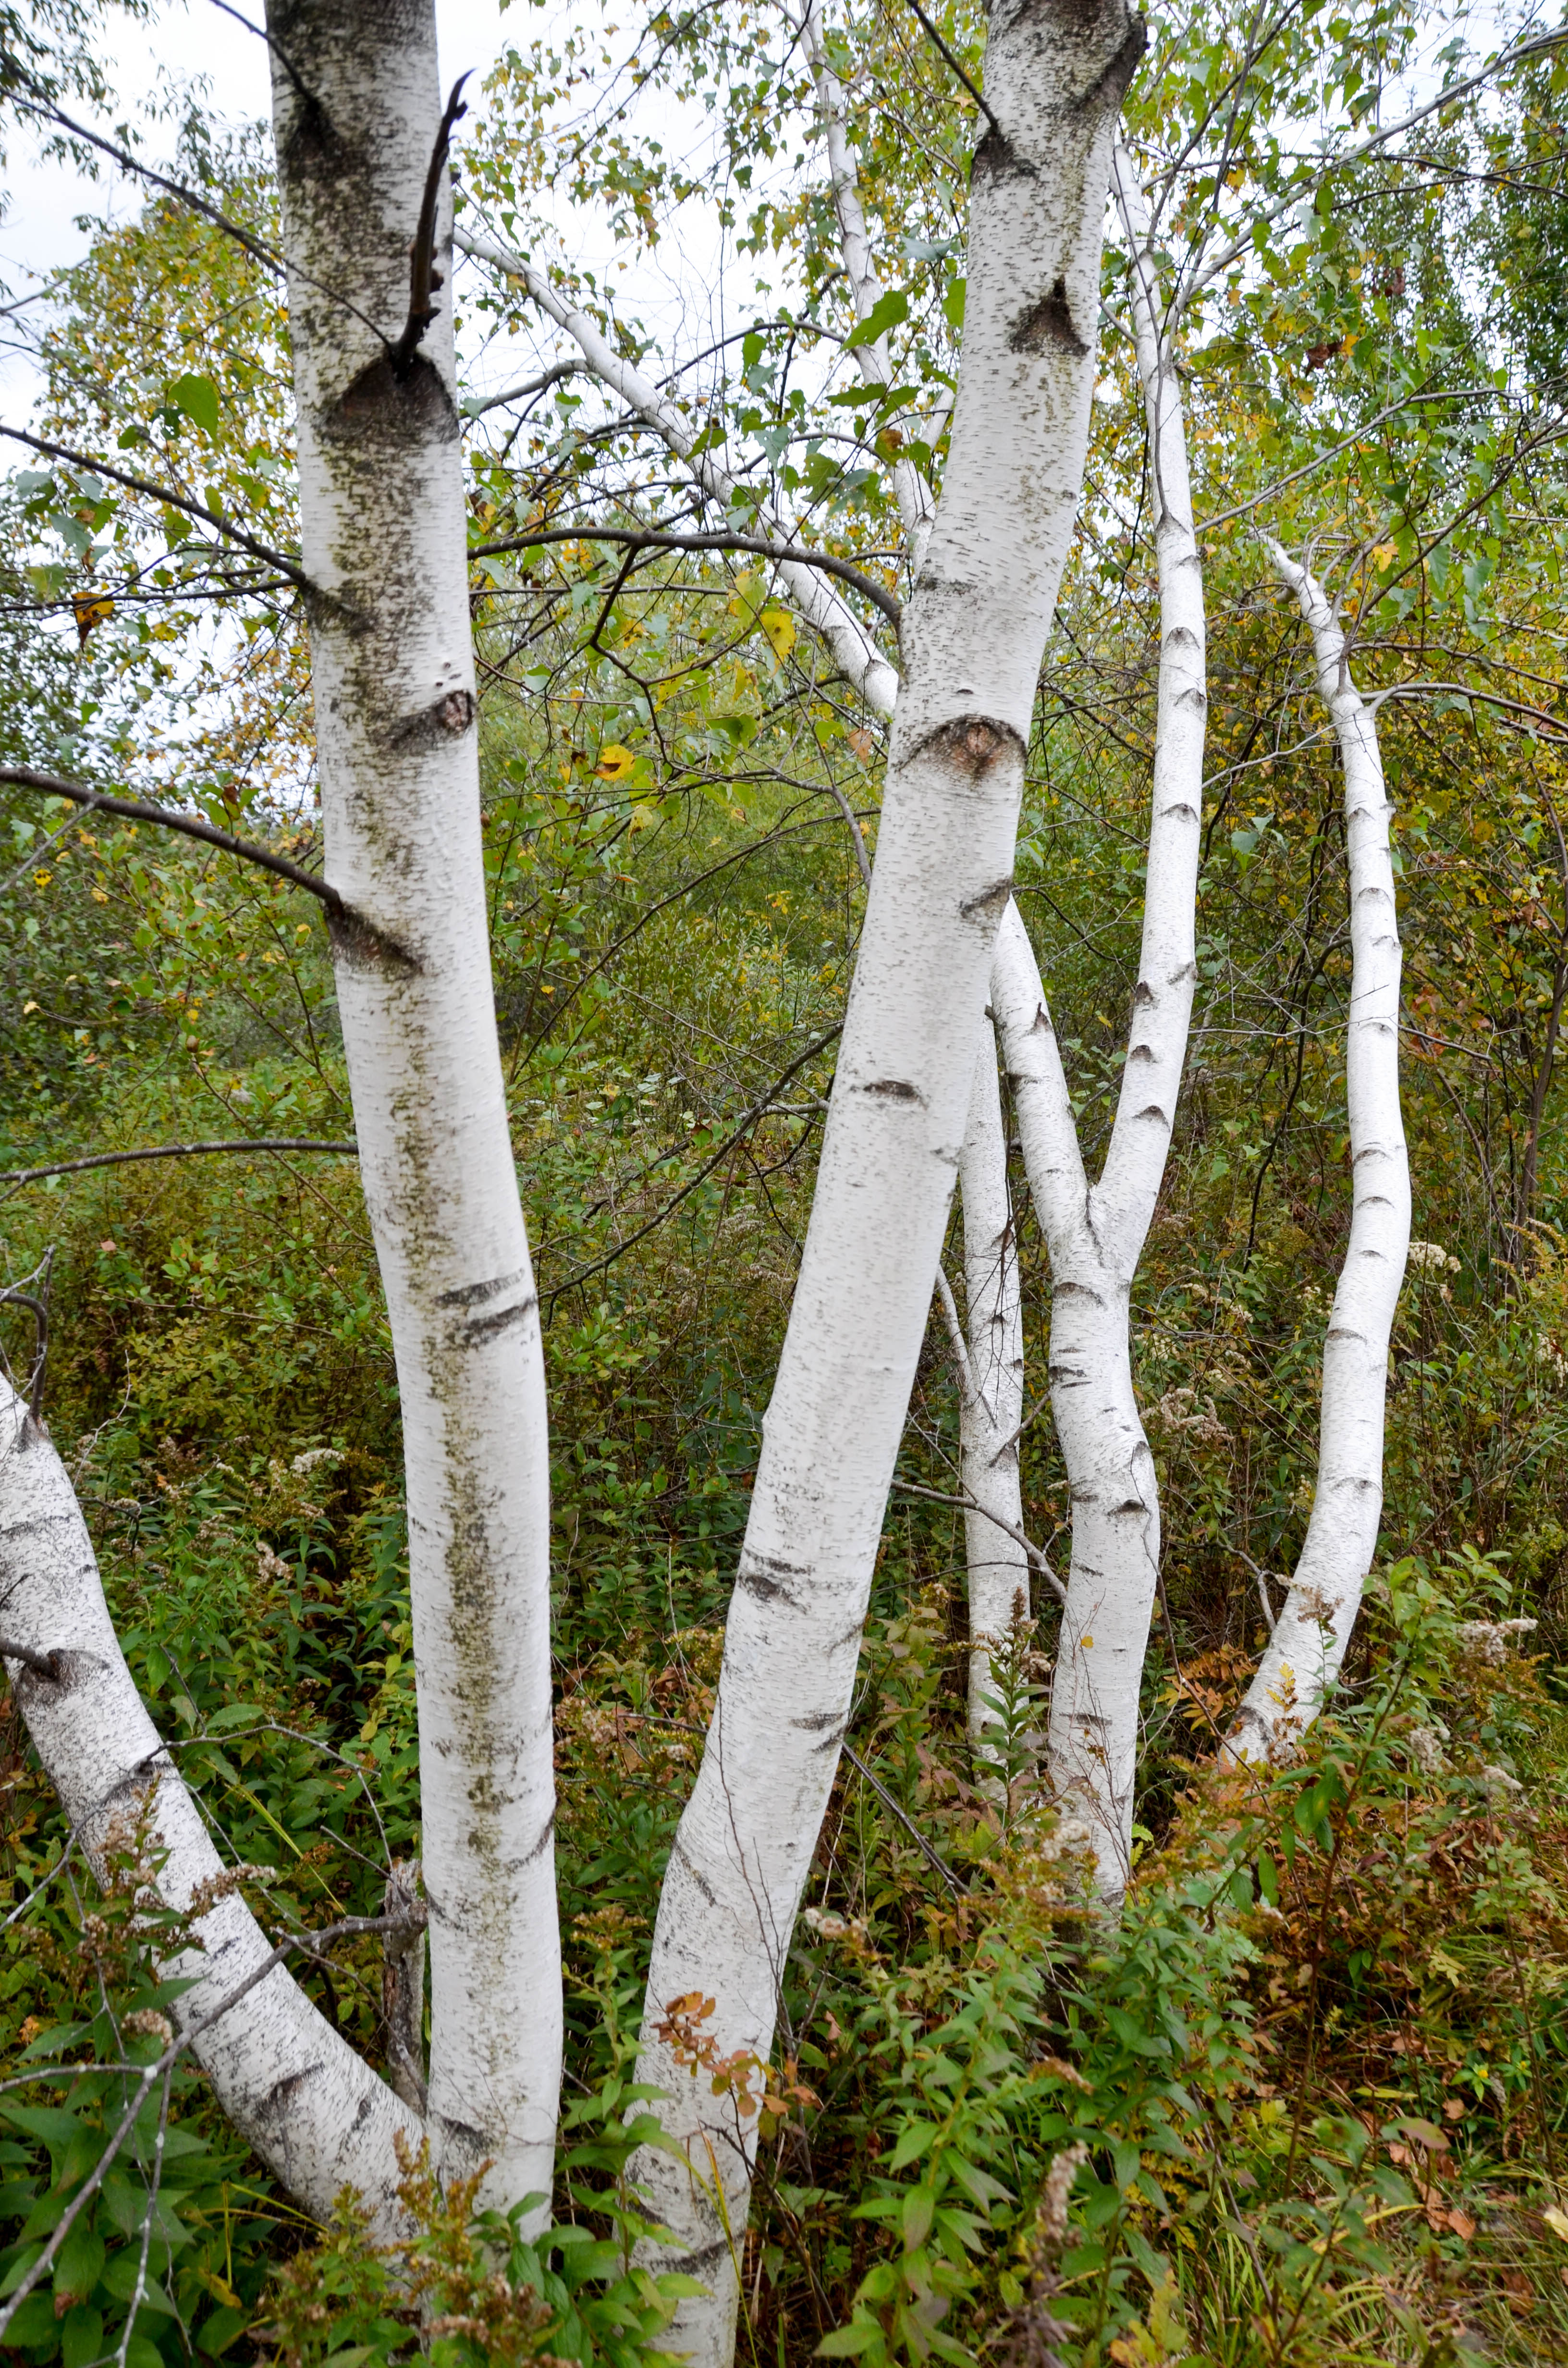 I love birch trees.